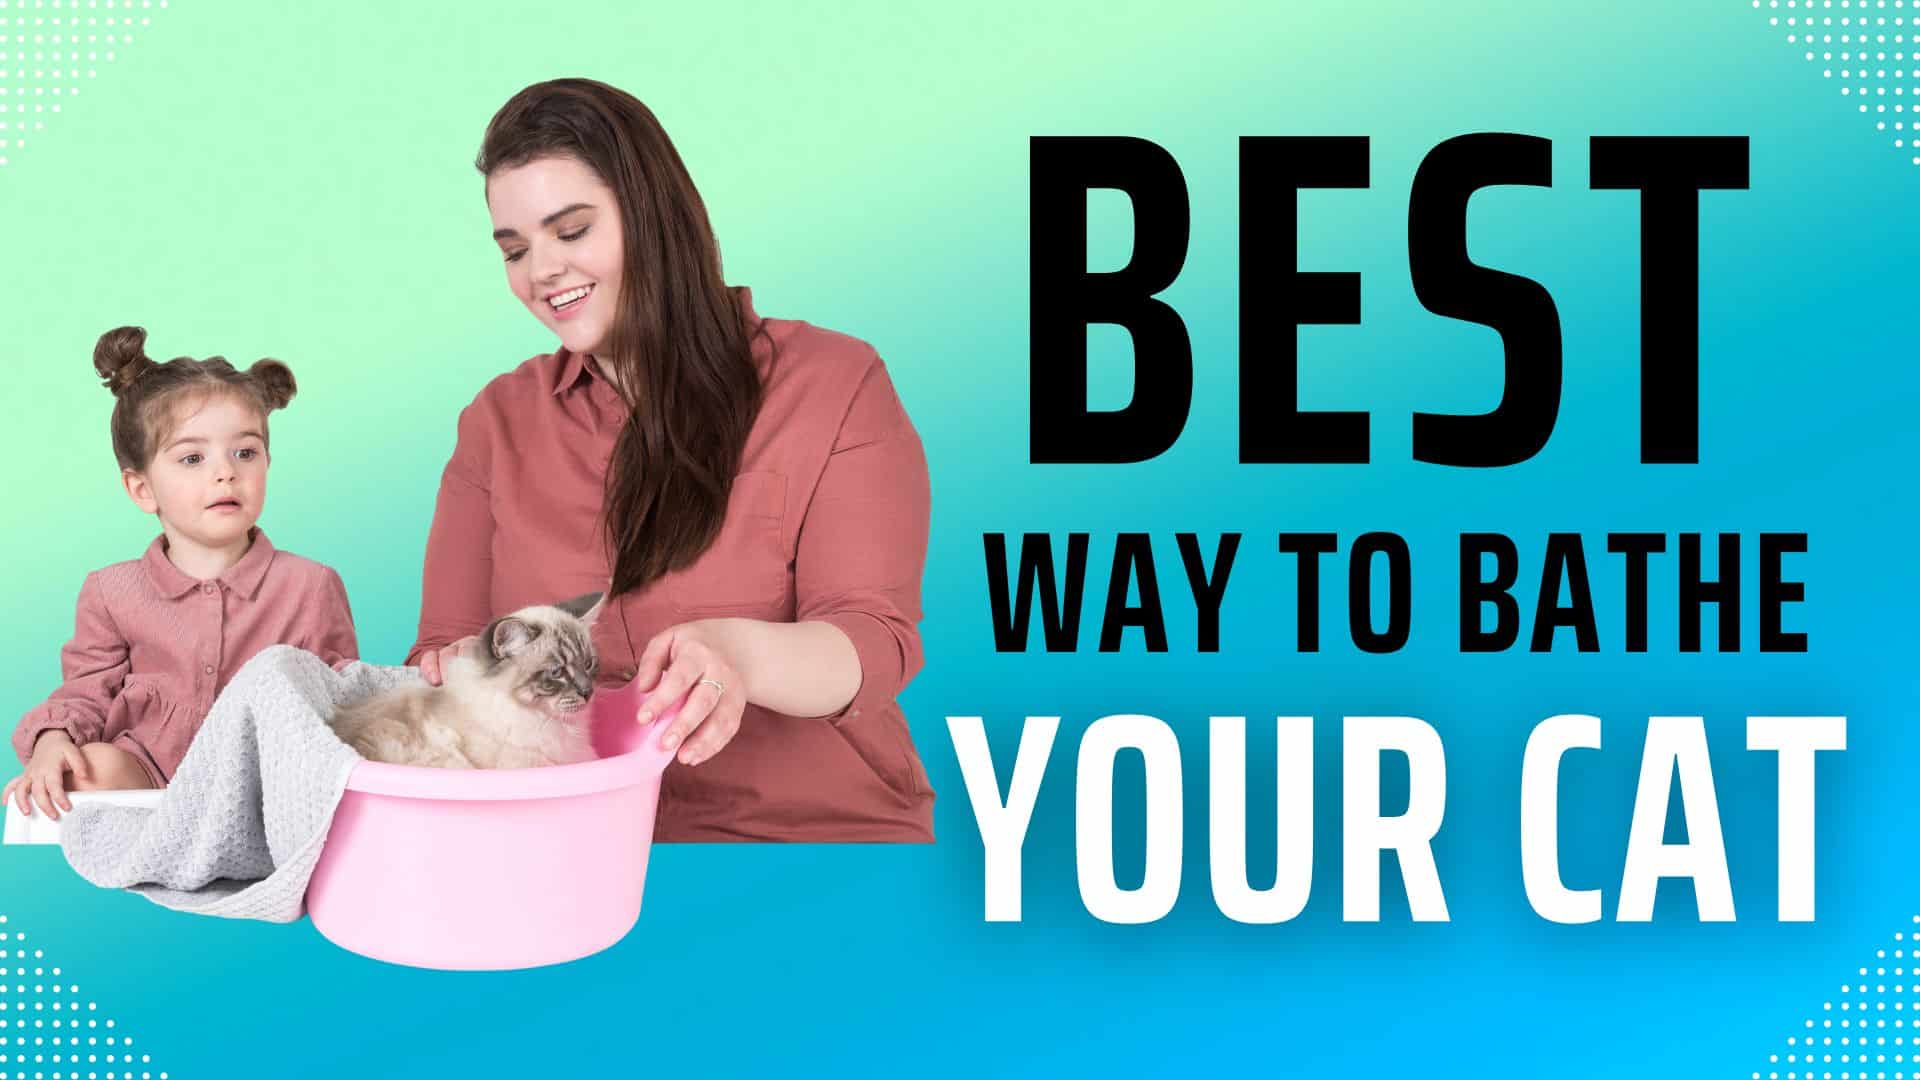 Best way to bathe your cat